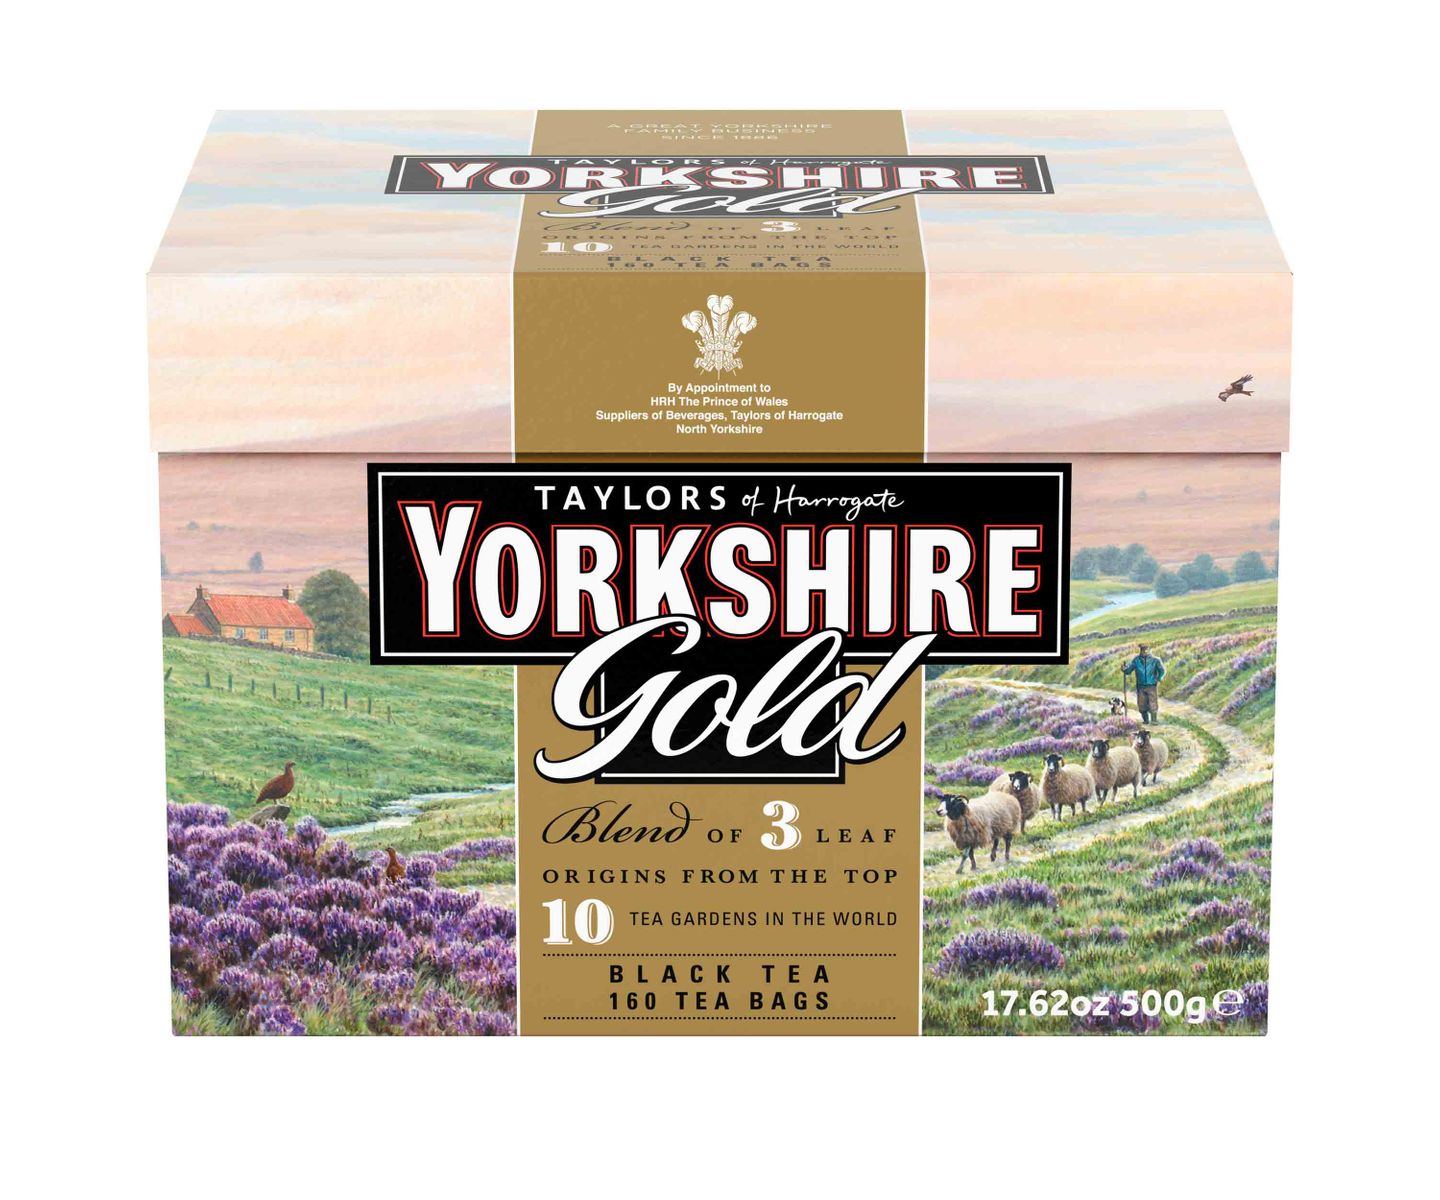   Taylors of Harrogate ヨークシャー ゴールドティー ティーバッグ 160個入り  | Taylors of Harrogate Yorkshire Gold Black Tea, Tea Bags, 160 Ct